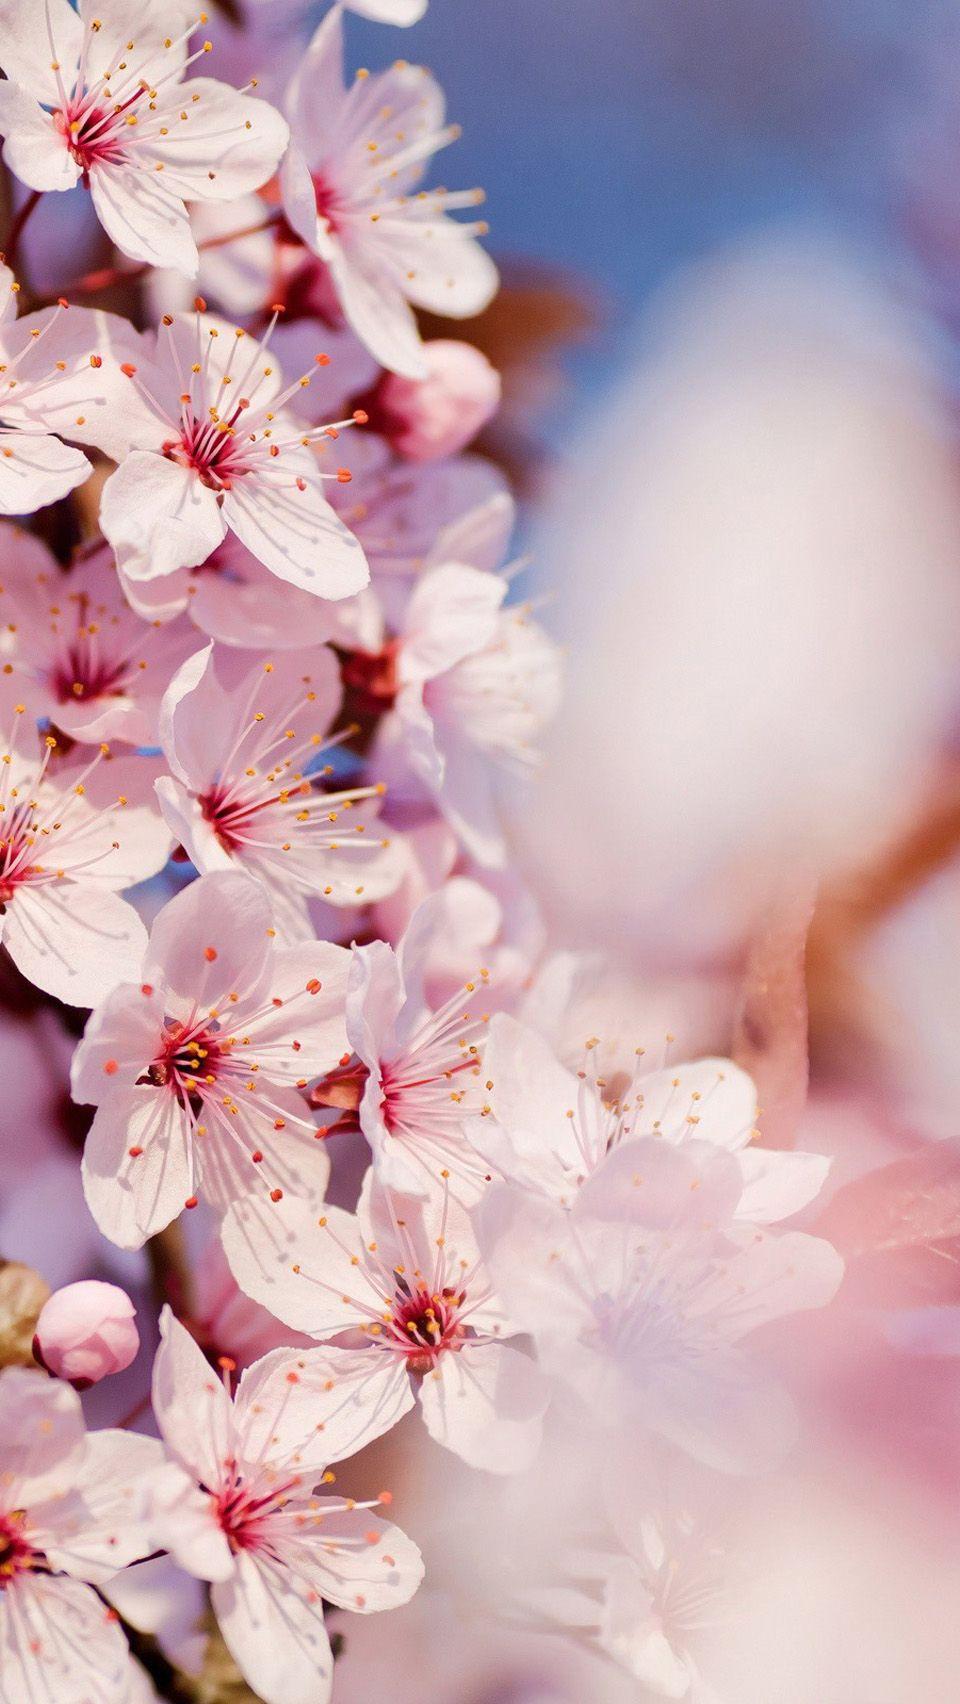 HD wallpaper cherry blossom desktop beauty in nature flower plant tree   Wallpaper Flare